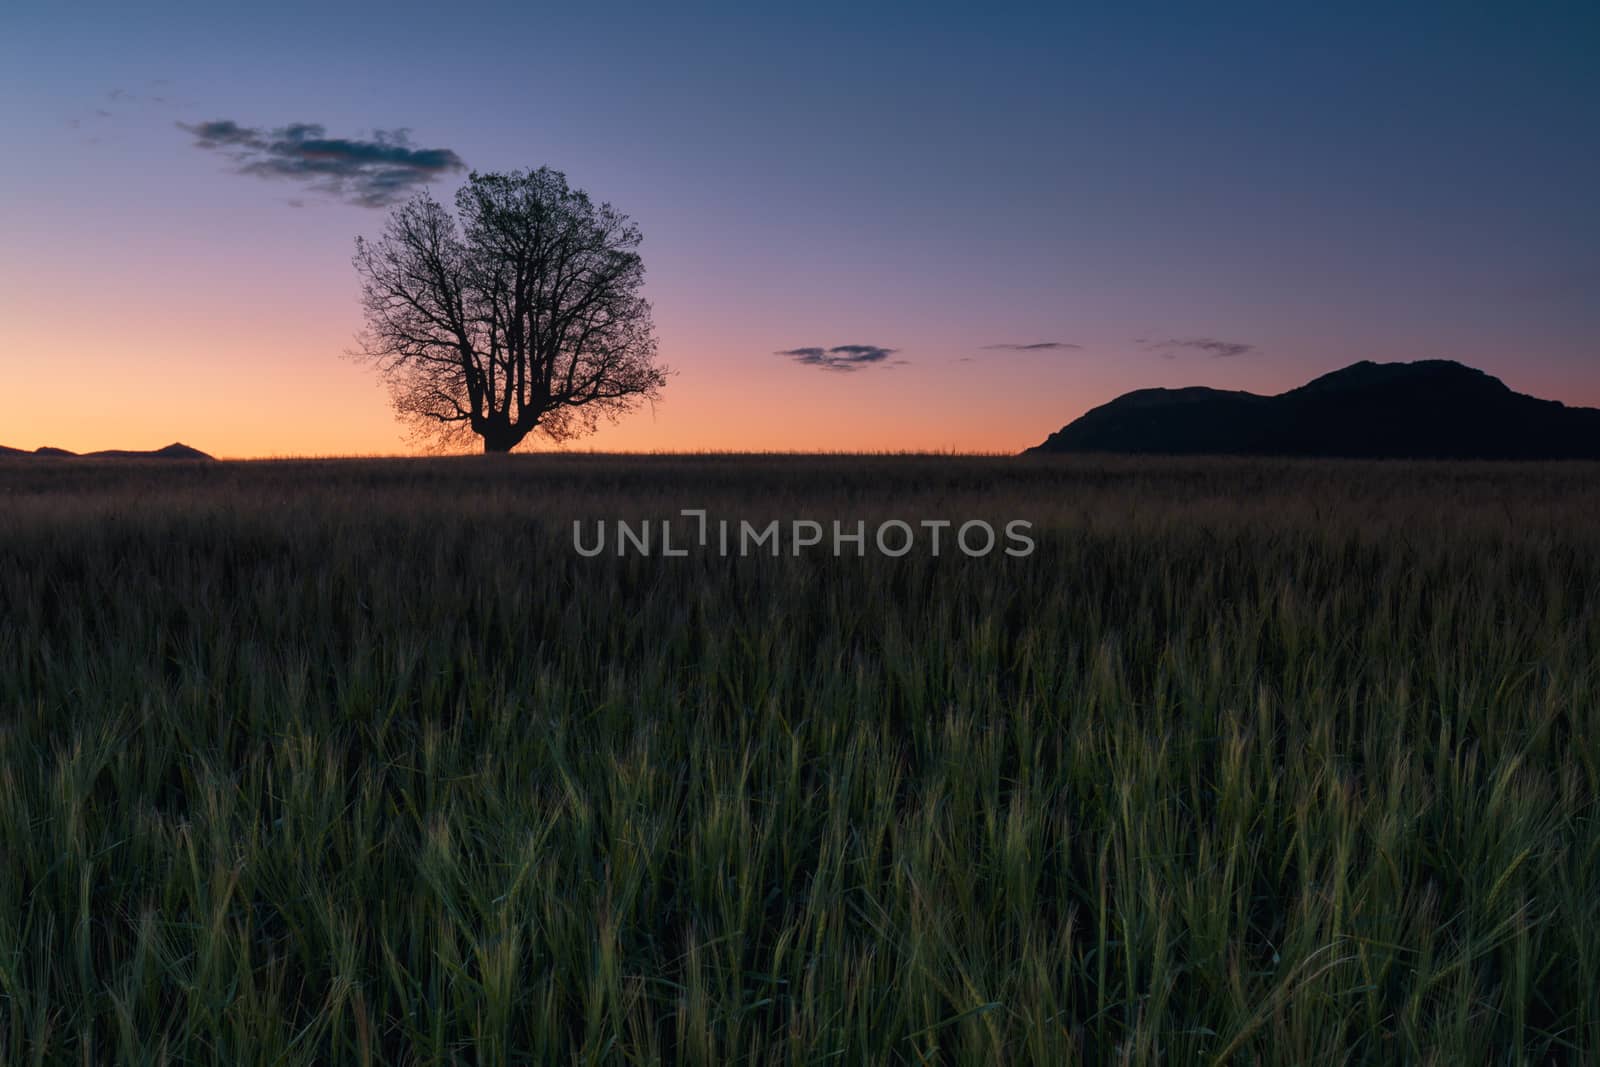 Green barley field ans a lonely oak at sunrise